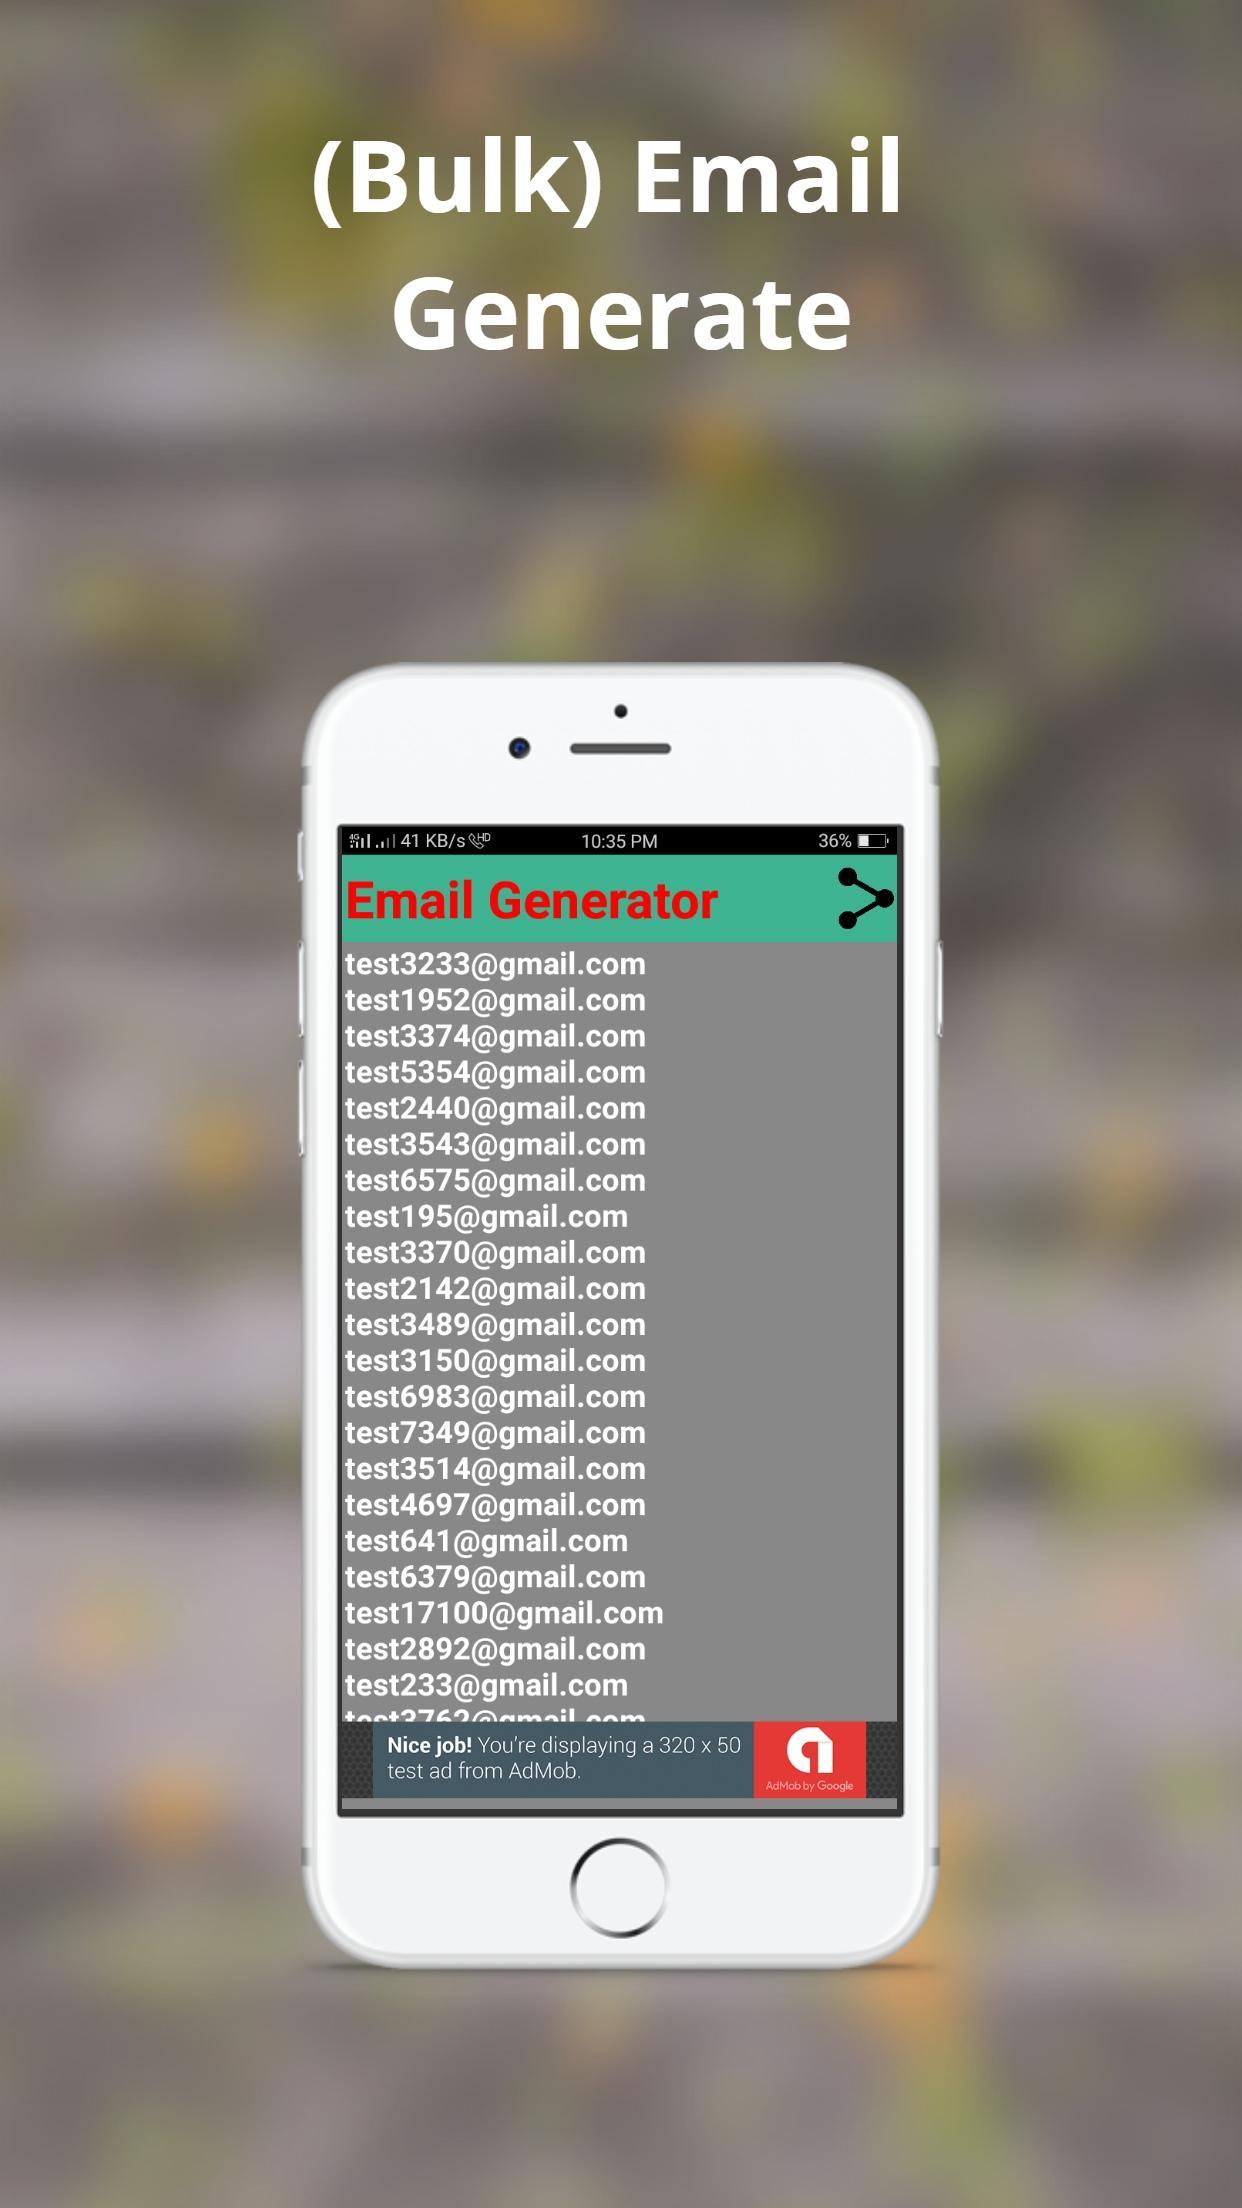 Random Email Generator Tool (Bulk) for Android - APK Download